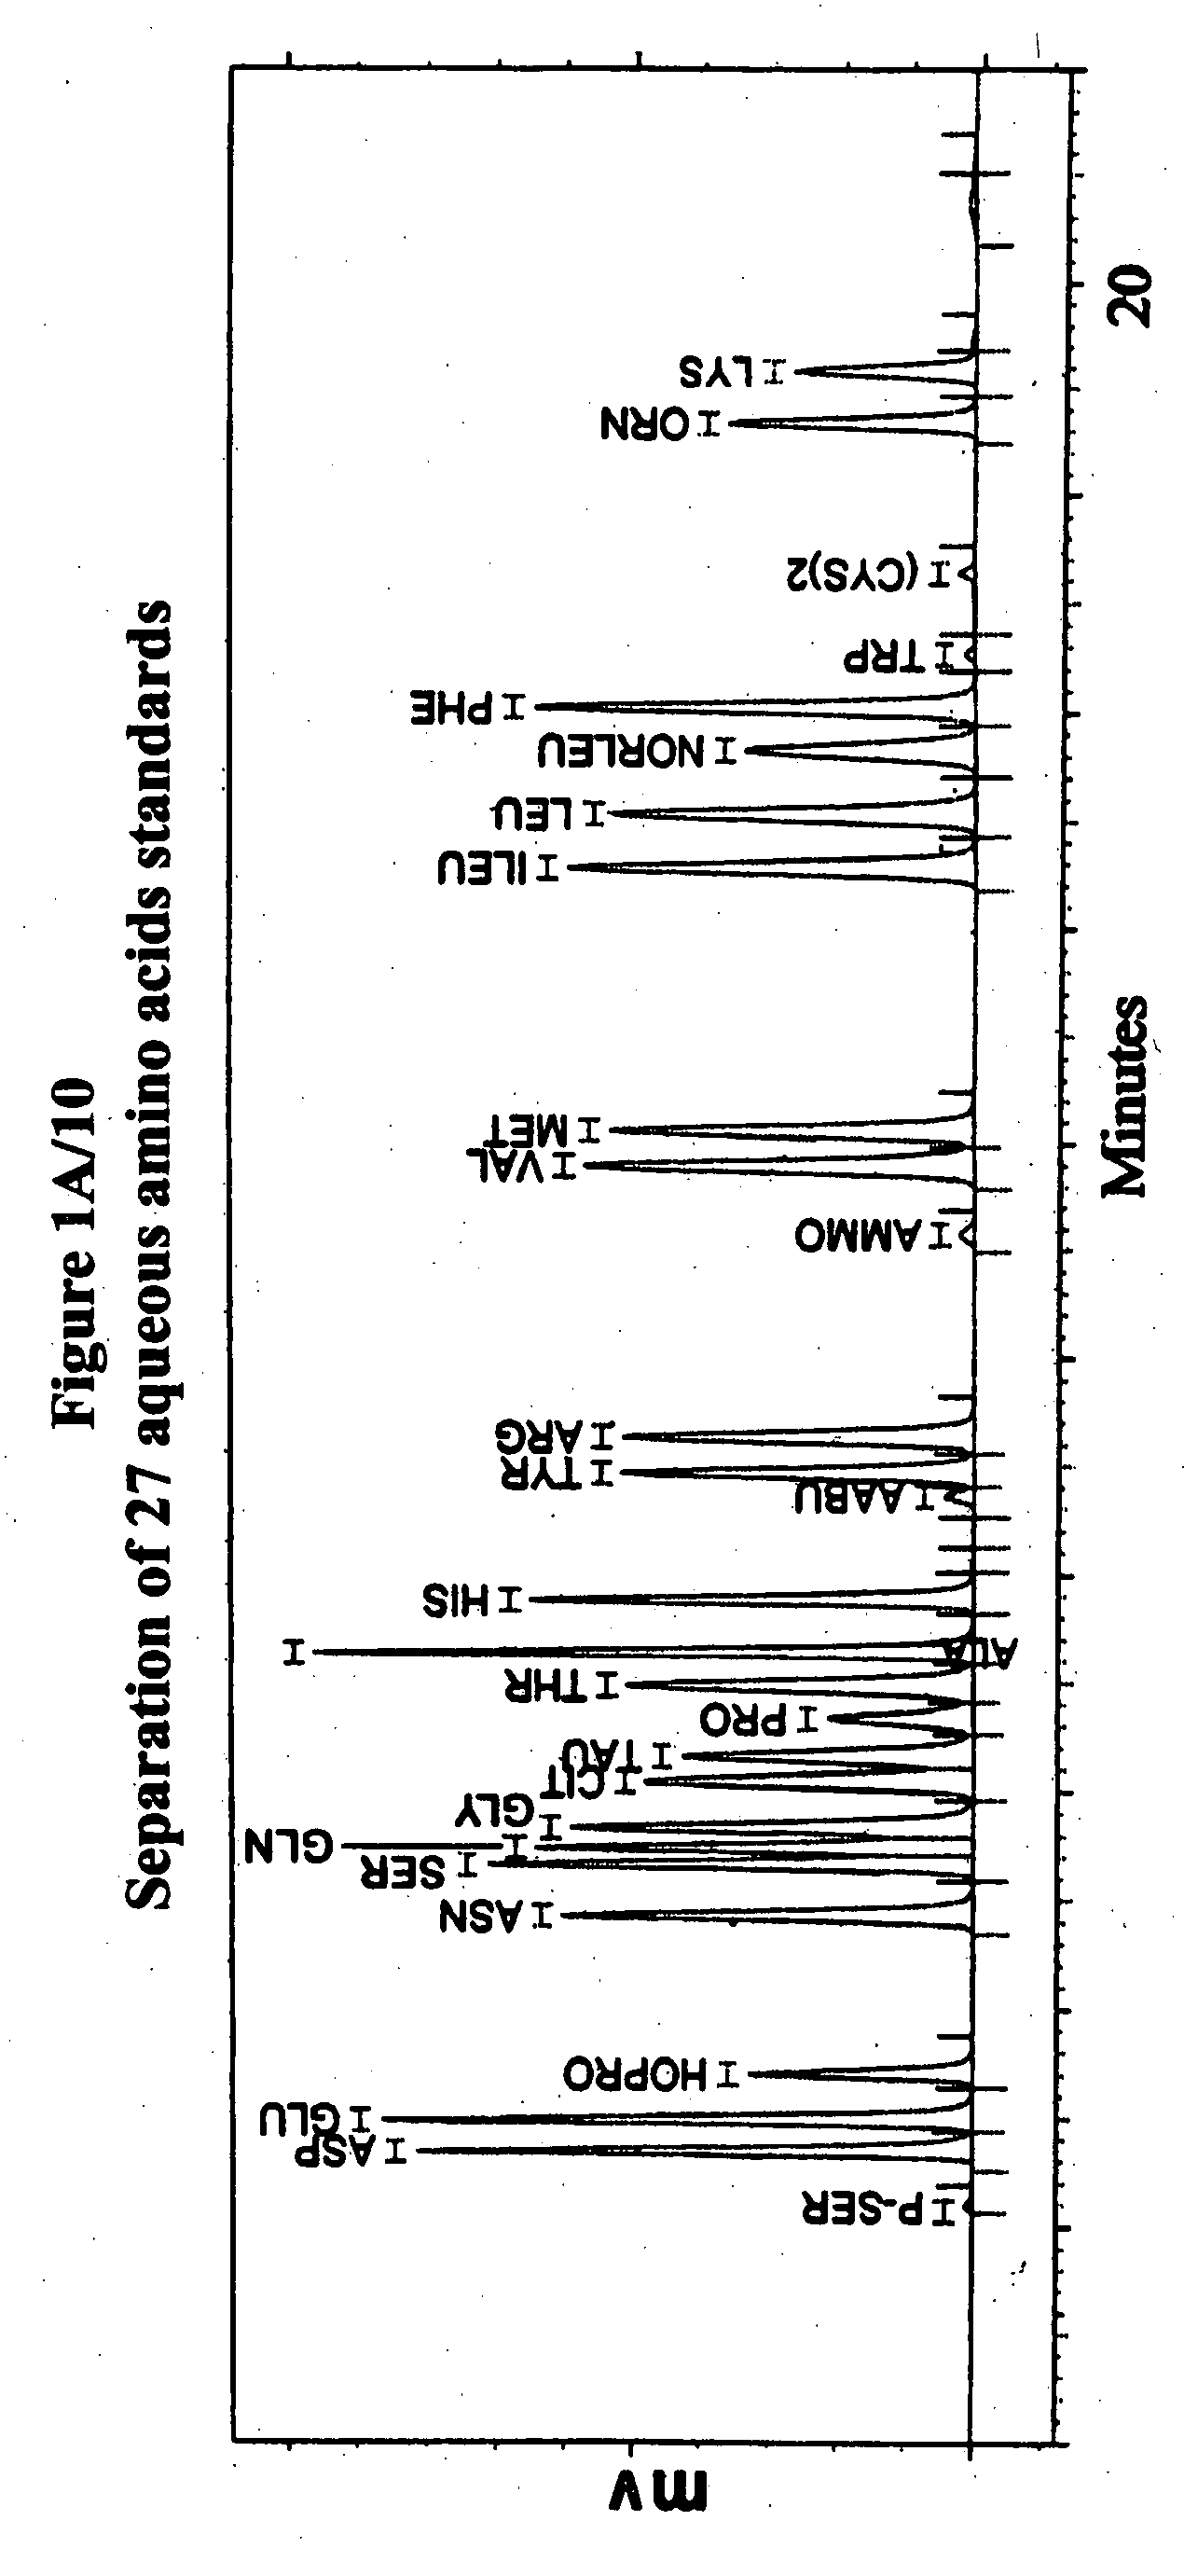 Human plasma free amino acids profile using pre-column derivatizing reagent- 1-naphthylisocyanate and high performance liquid chromatographic method